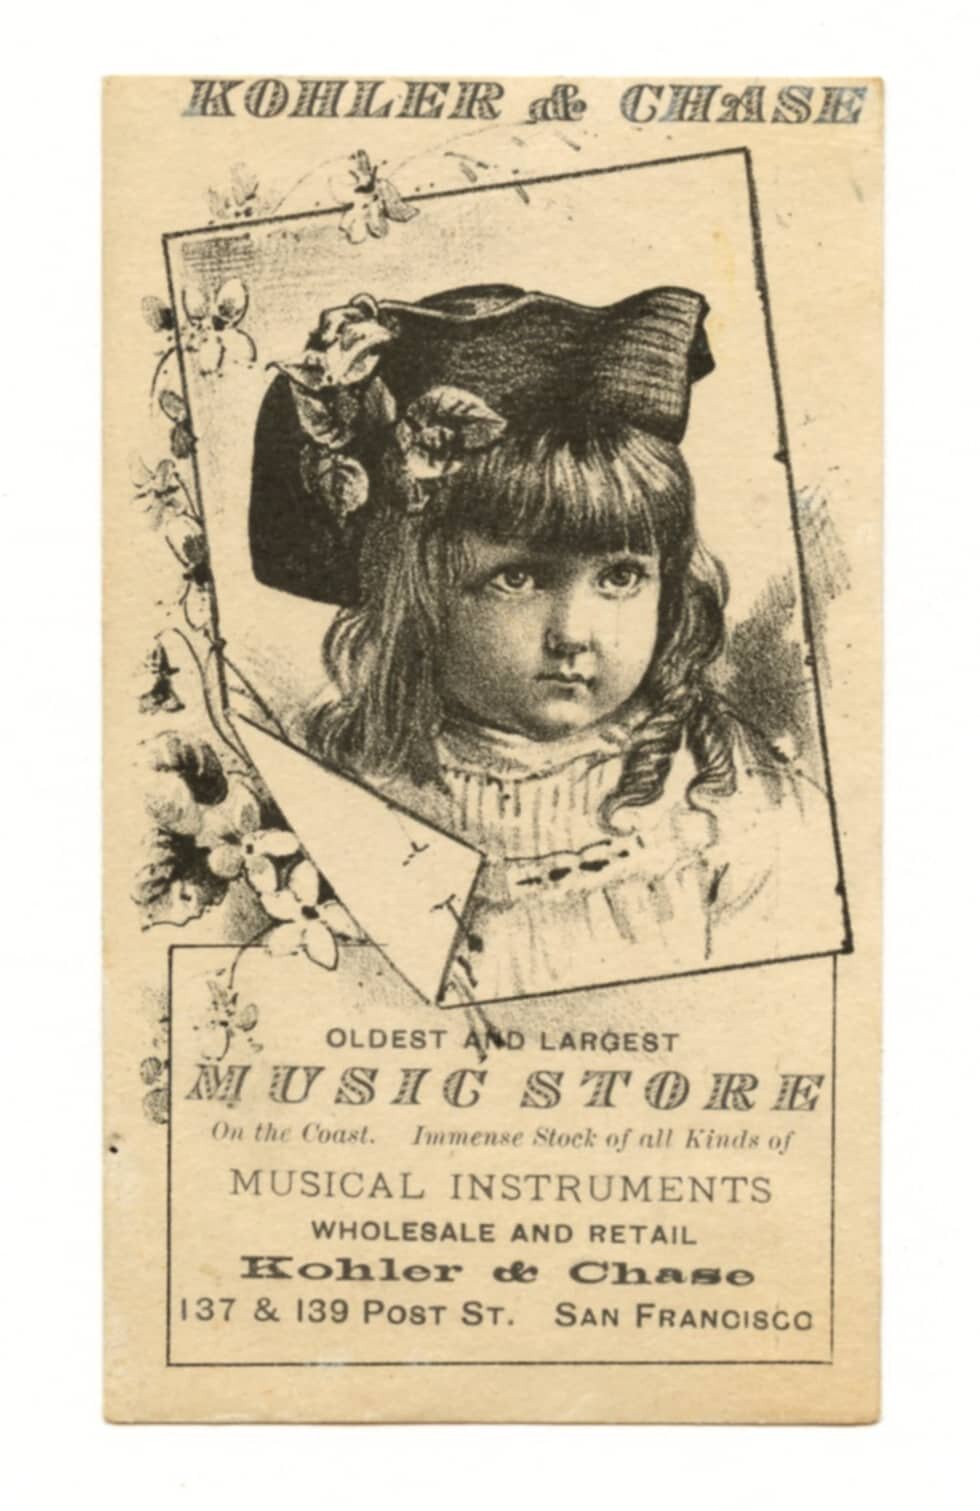 1880s Kohler & Chase Music Store San Francisco Advertise Card